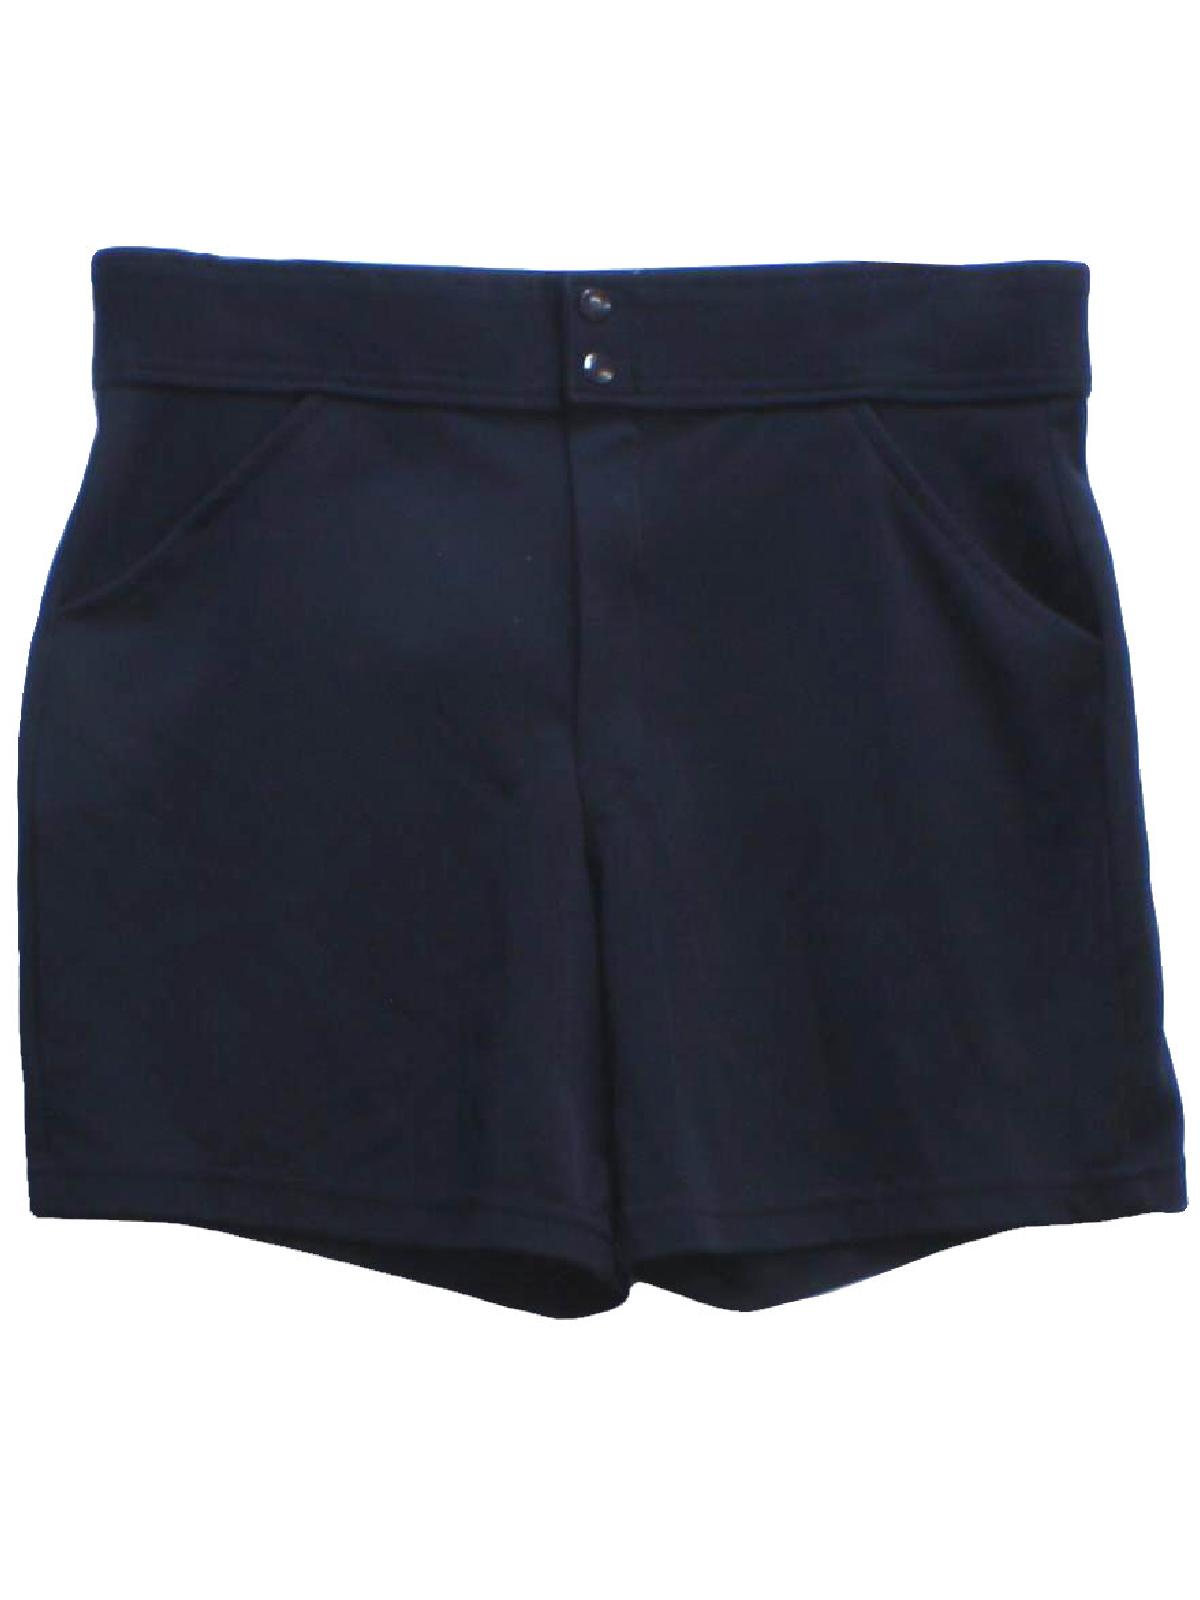 1990's Retro Shorts: 90s -Care Label- Mens black background double knit ...